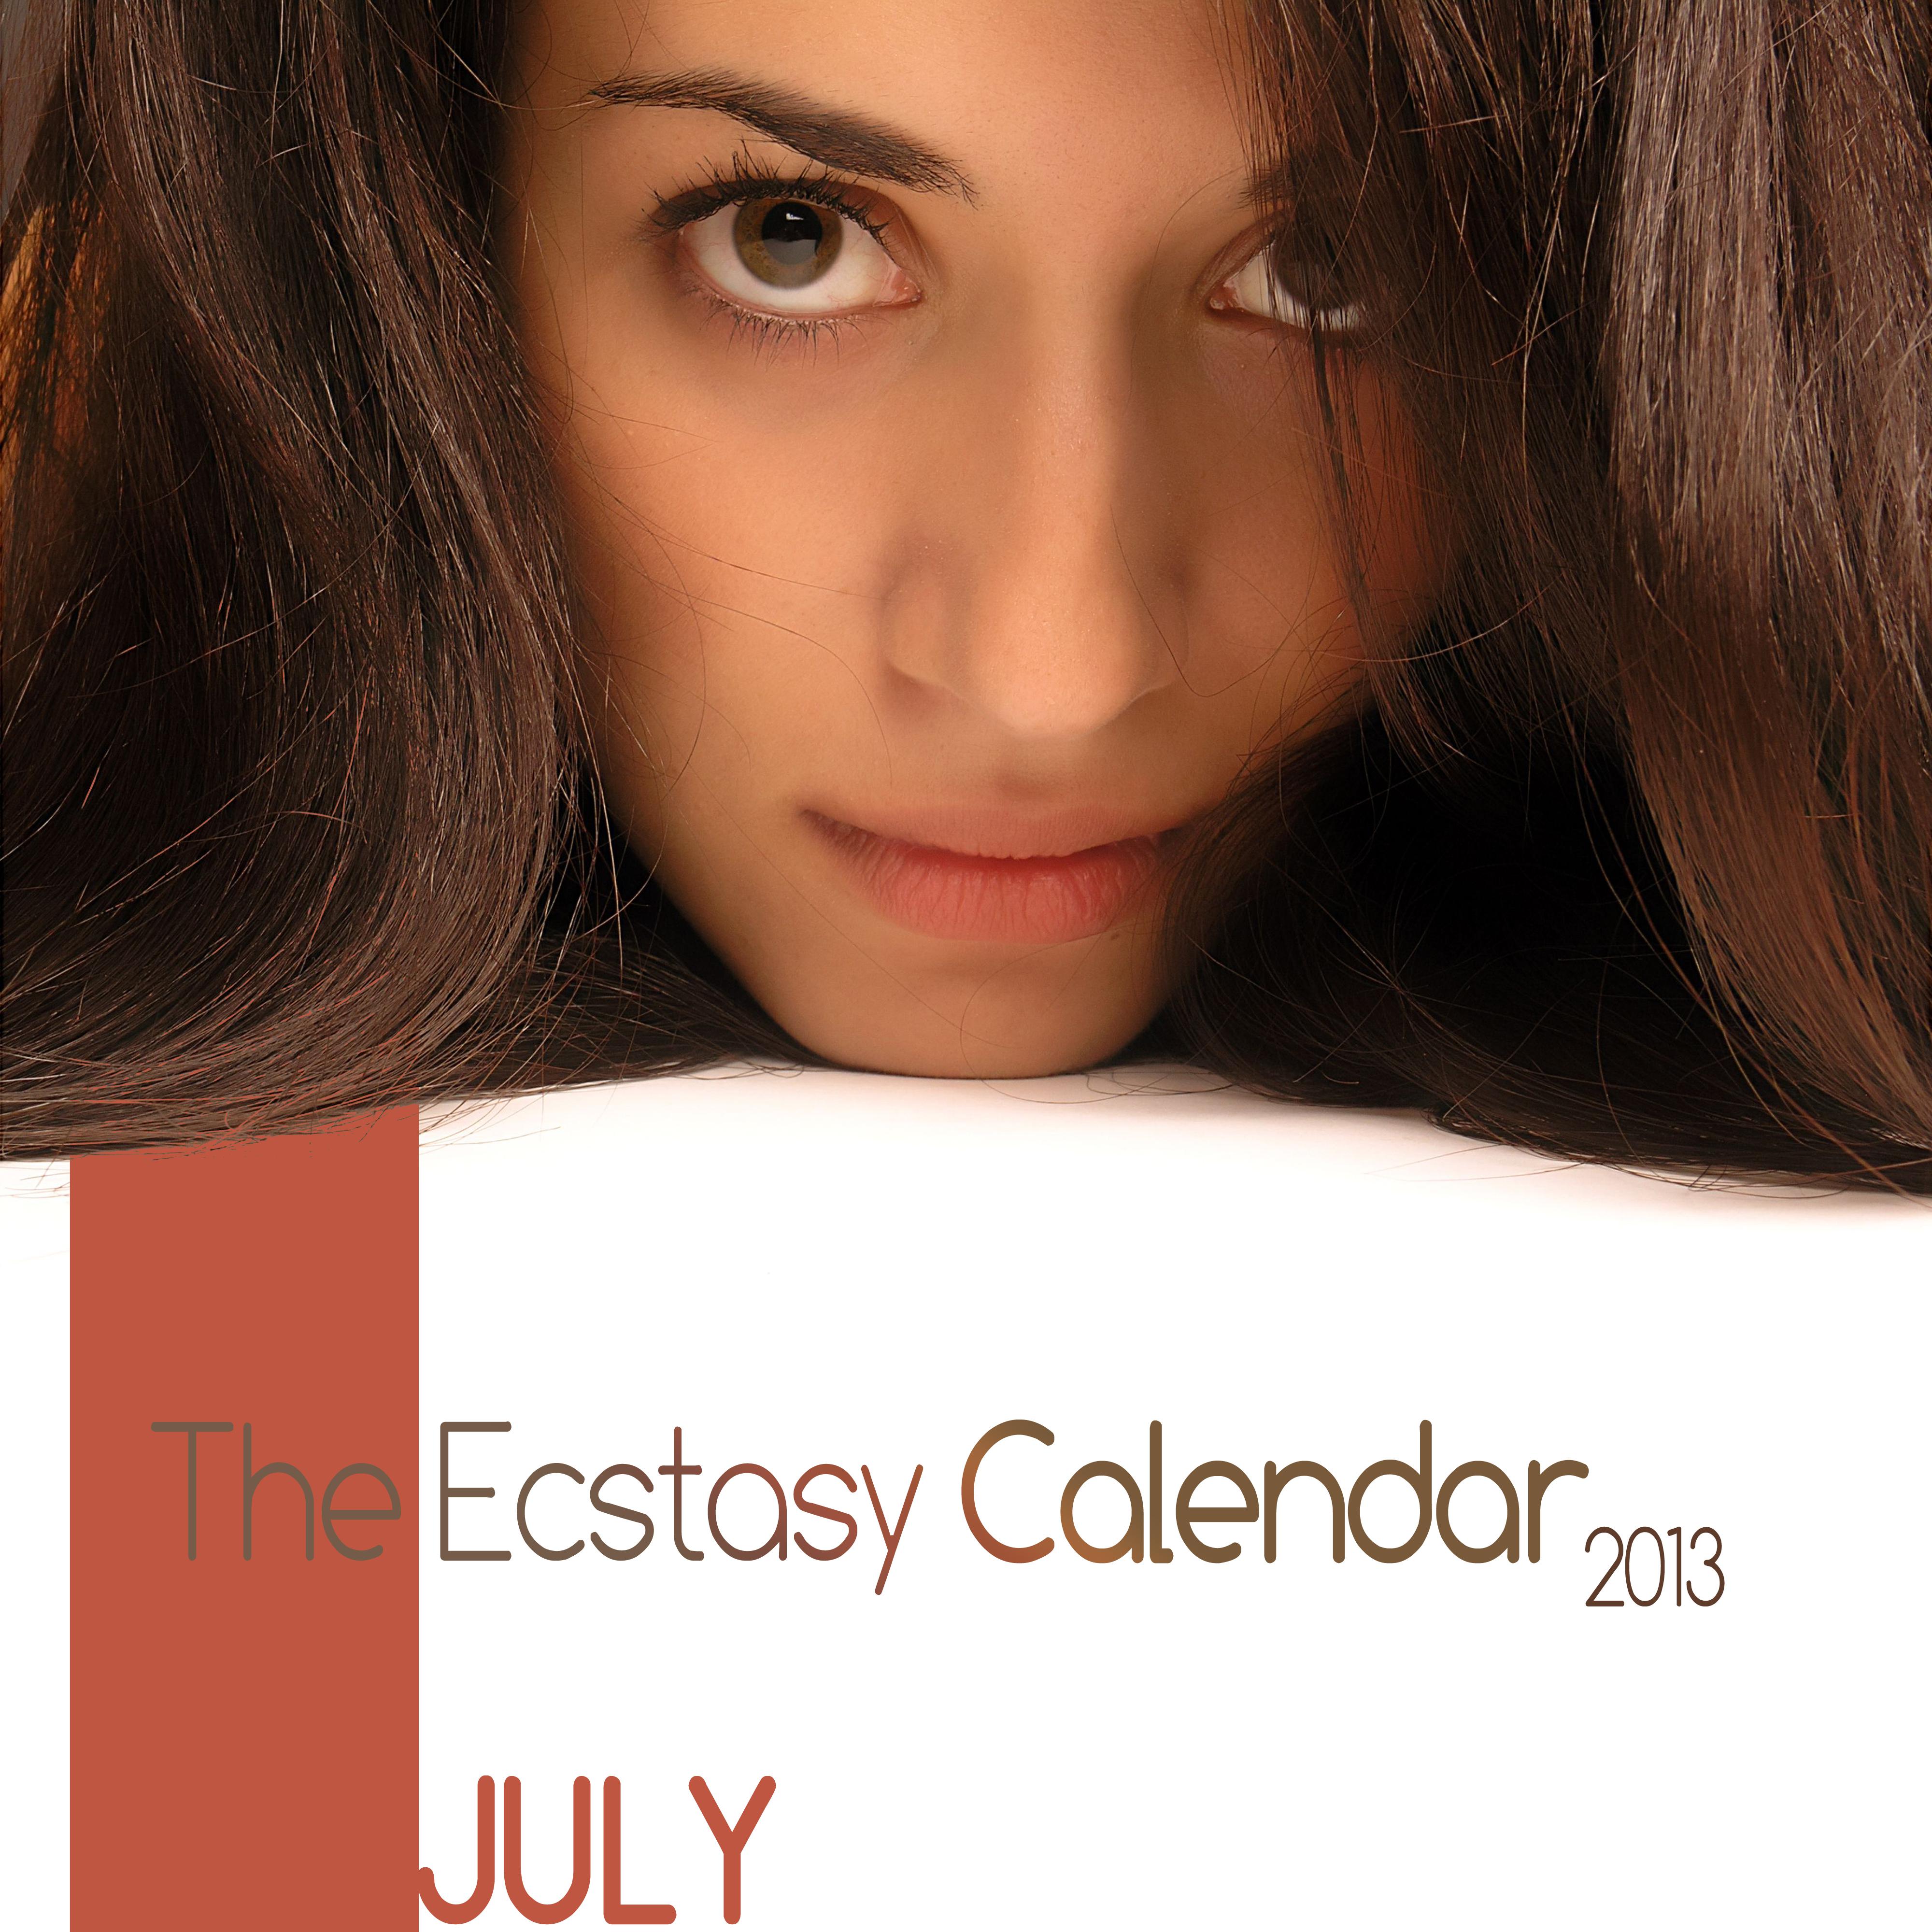 The Ecstasy Calendar 2013: July (Quixotic Chillout Melodies)